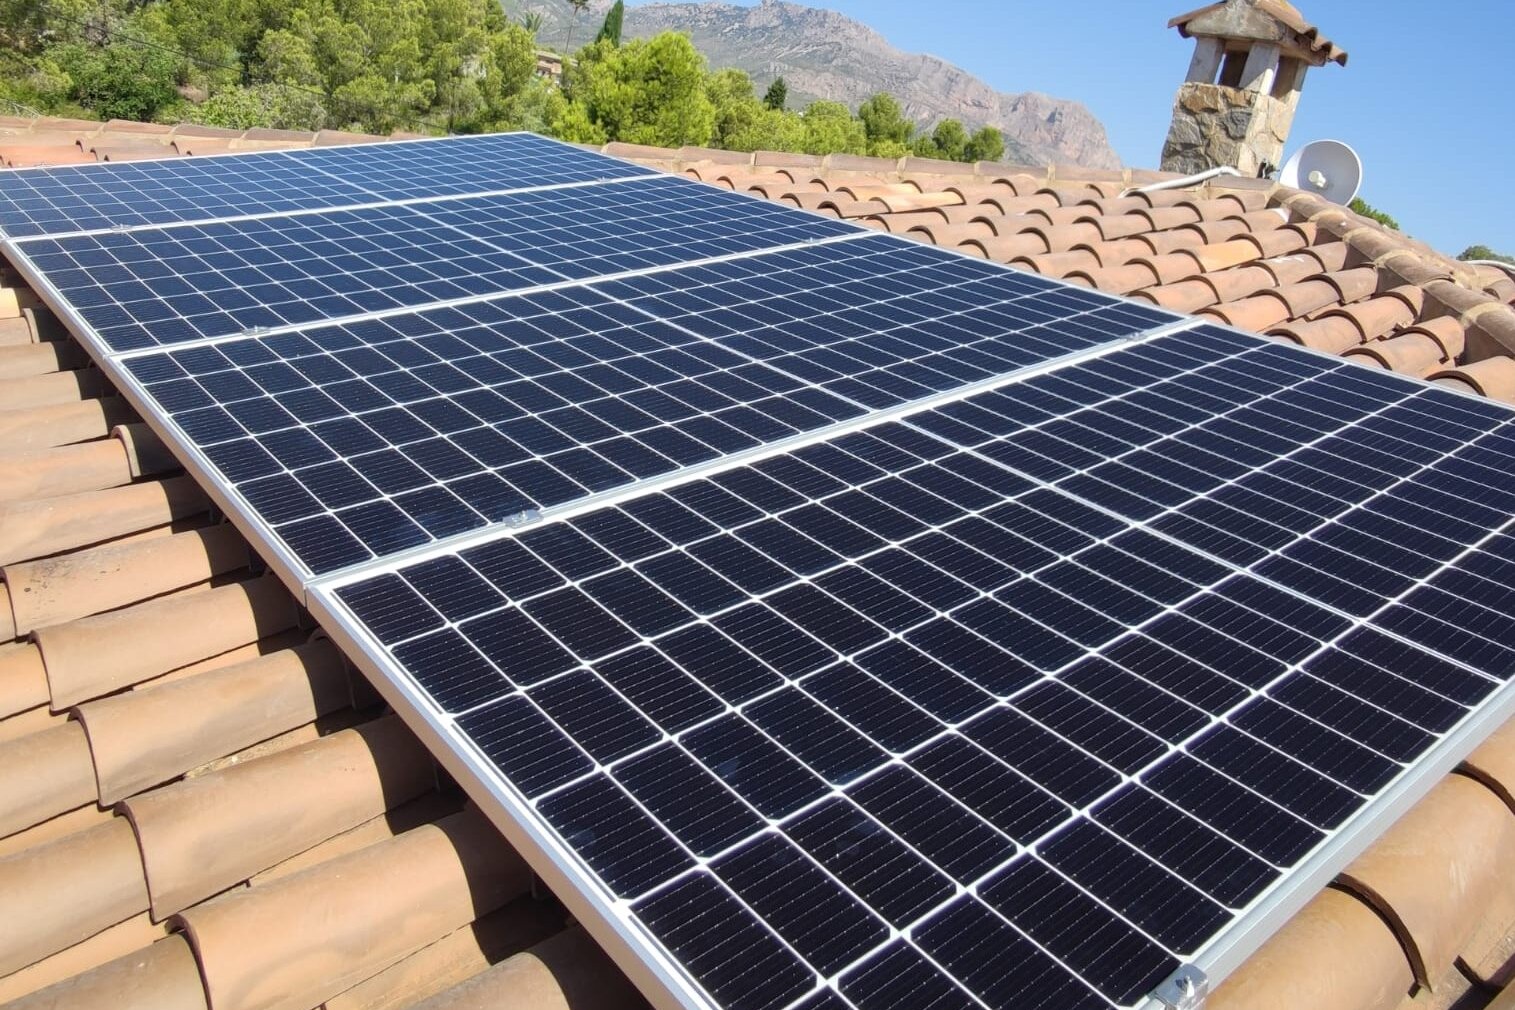 14X 460 wp Solar Panels, Benidorm, Alicante (Hybrid system)